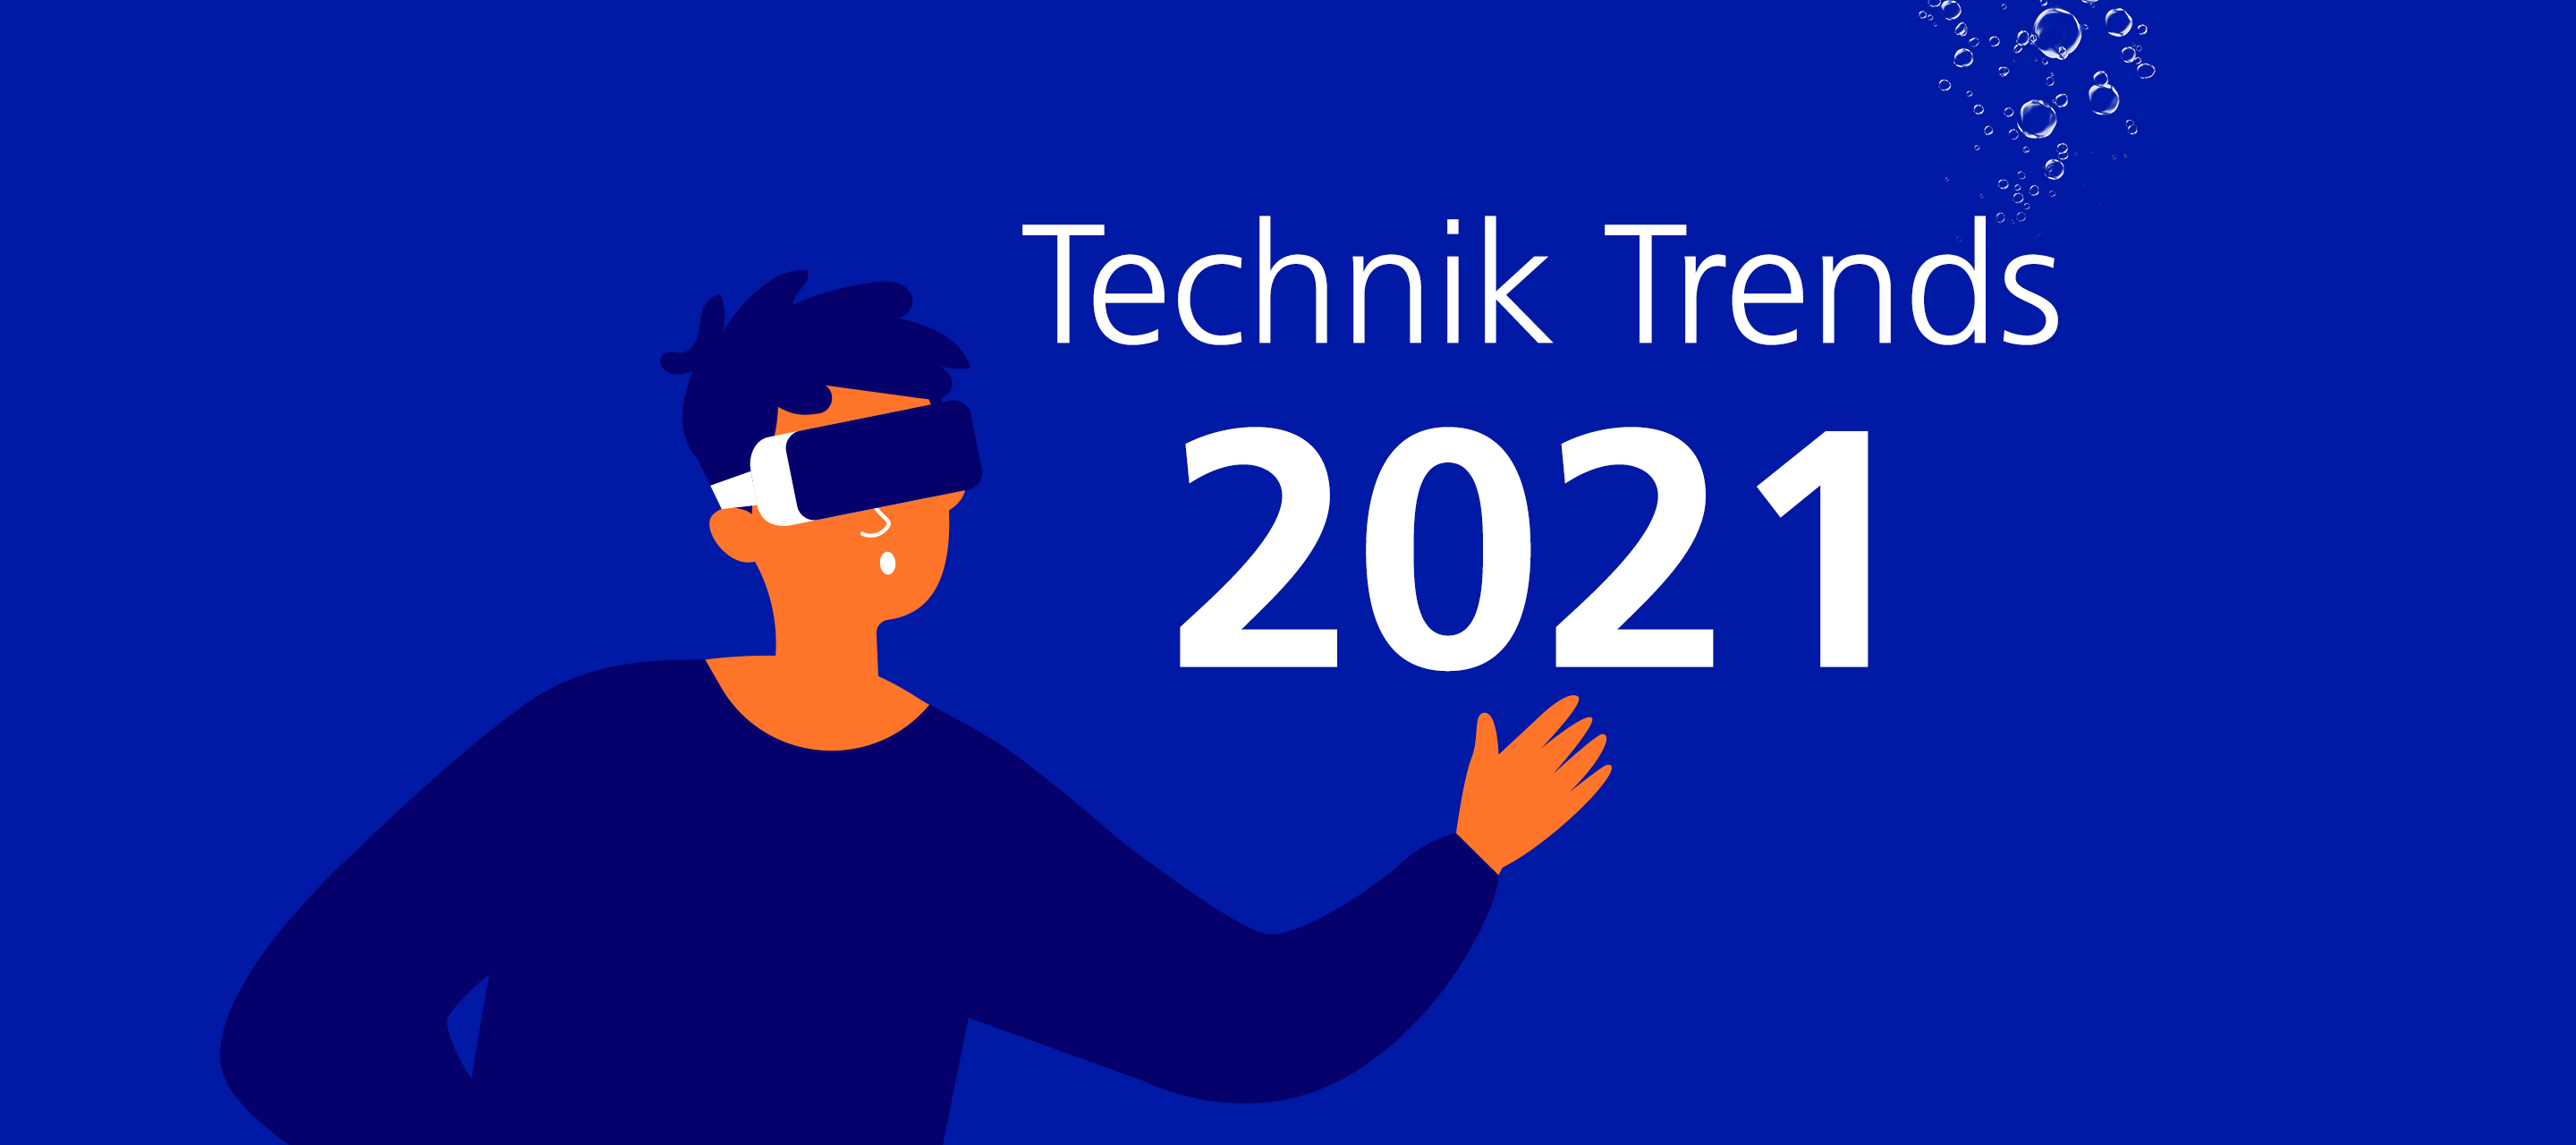 Technik Trends 2021: Diese Highlights erwarten uns